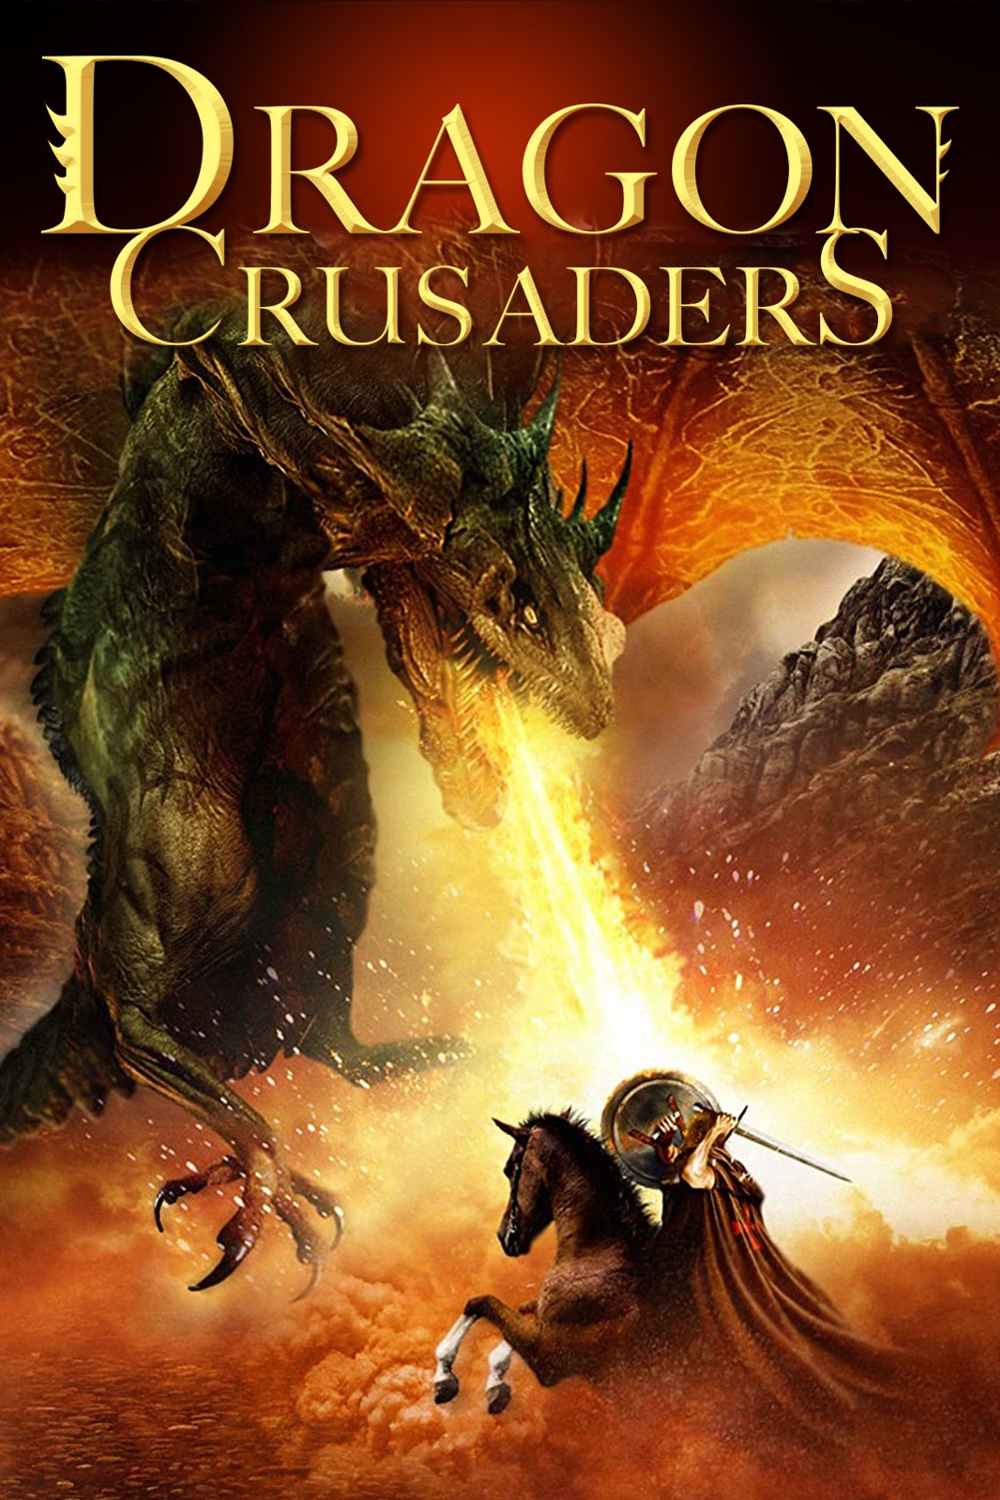 Dragon Crusaders [HD] (2011)